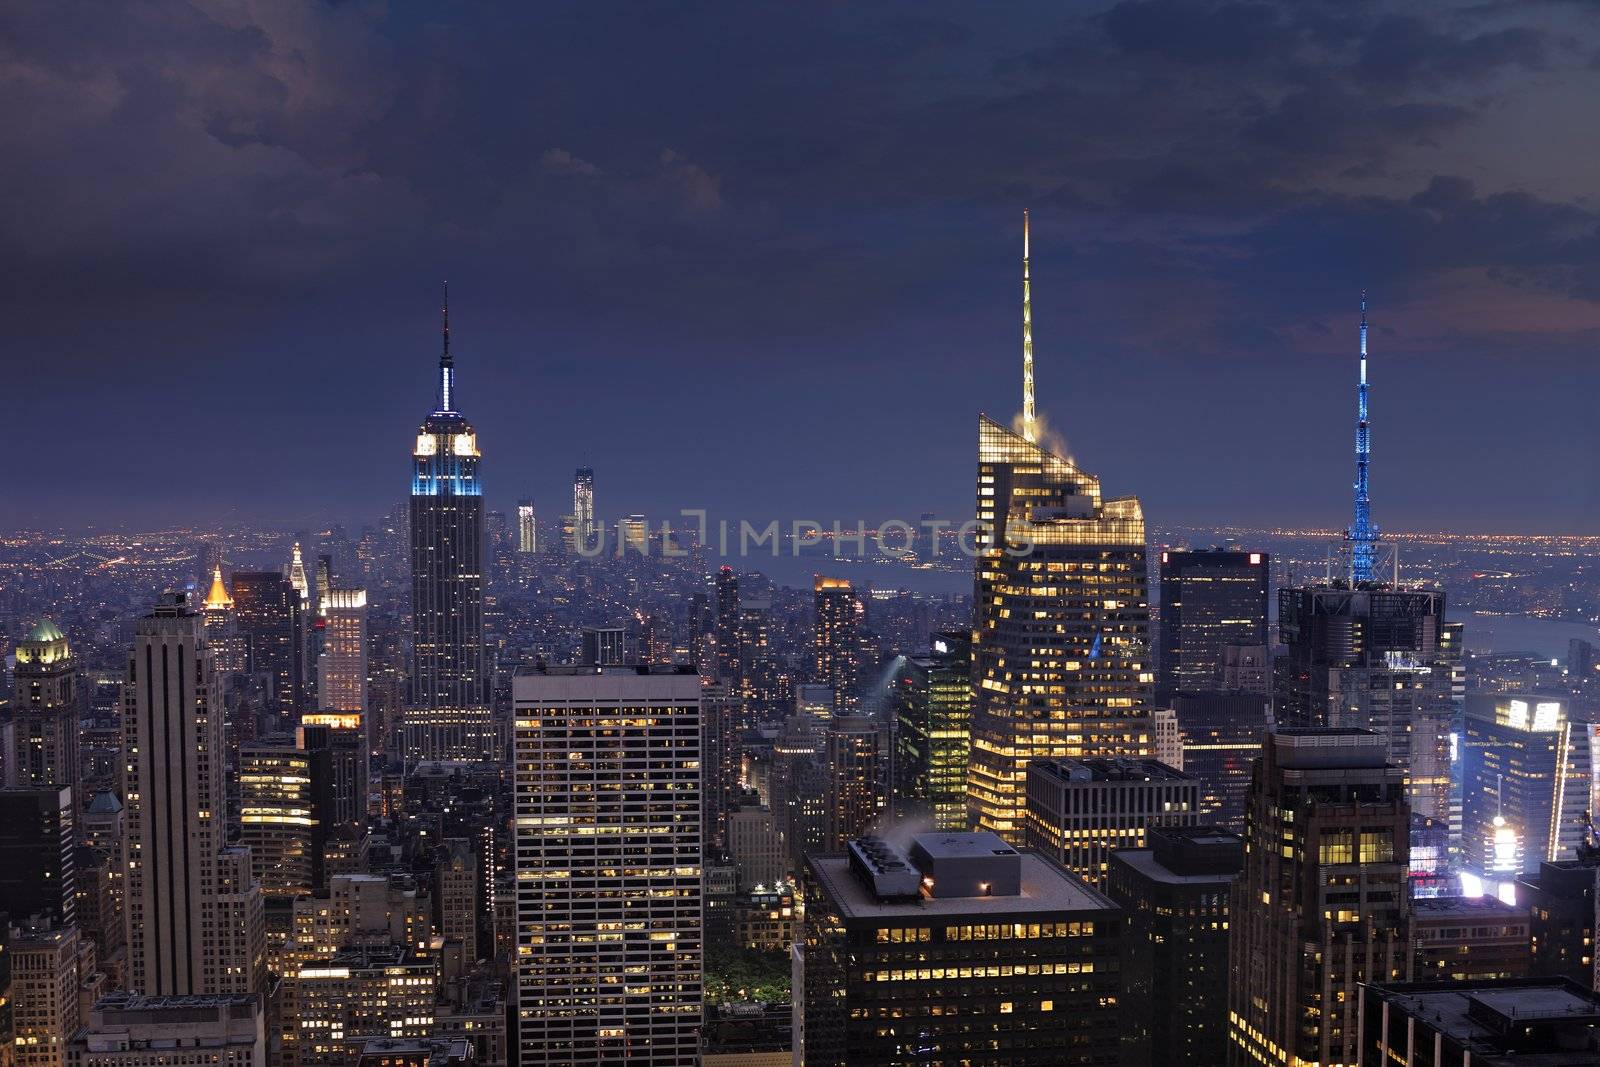 Manhattan at dusk. New York City, USA.